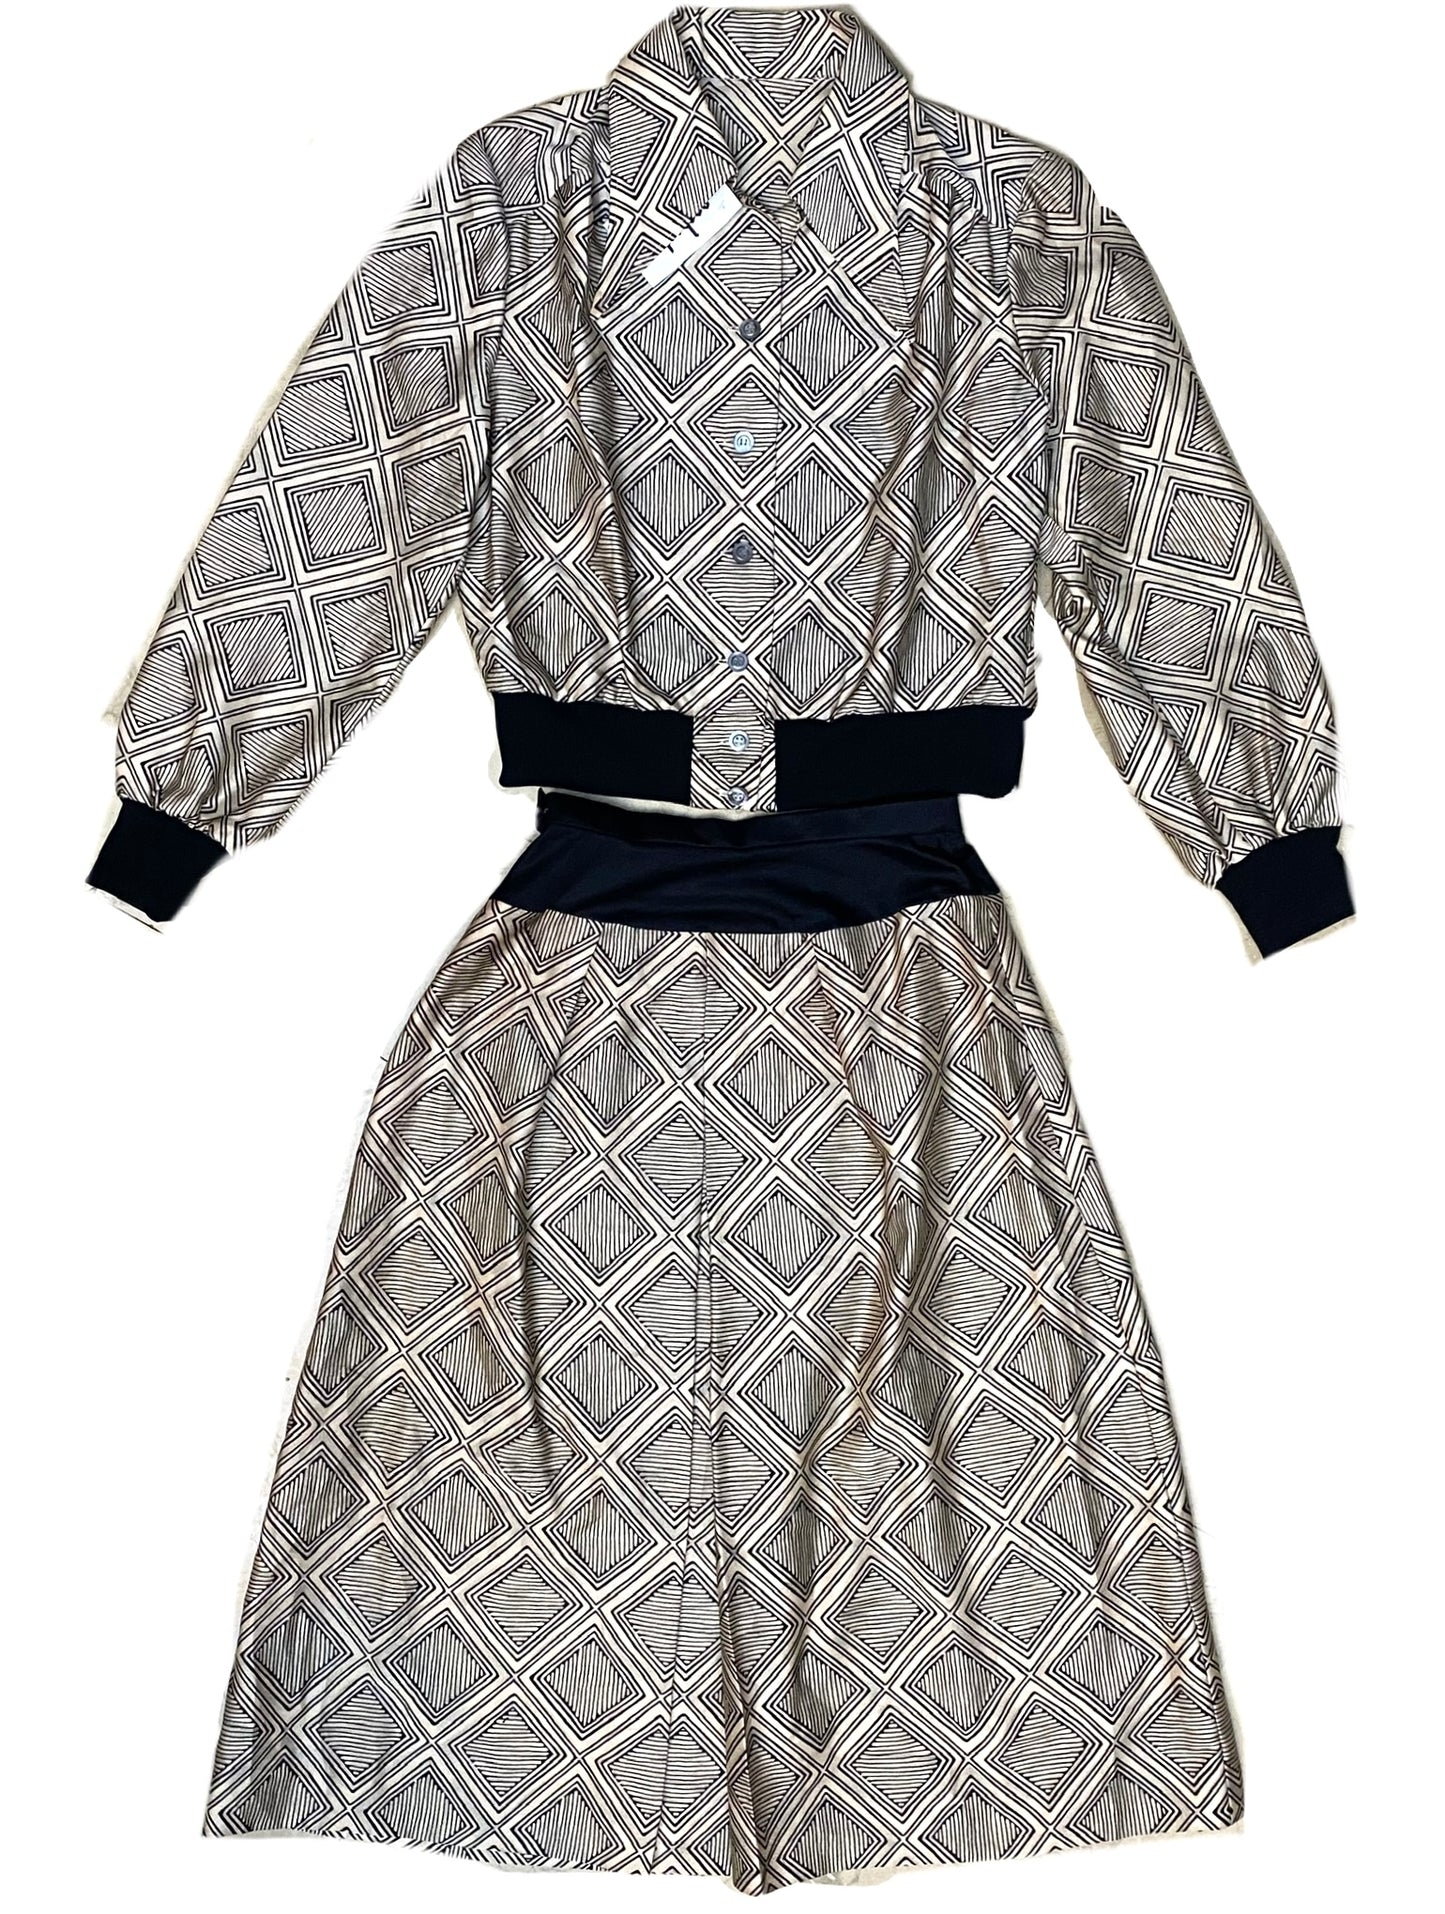 Wiener Tailor made 1970s geometrical allover satin 2pcs set dress, mint